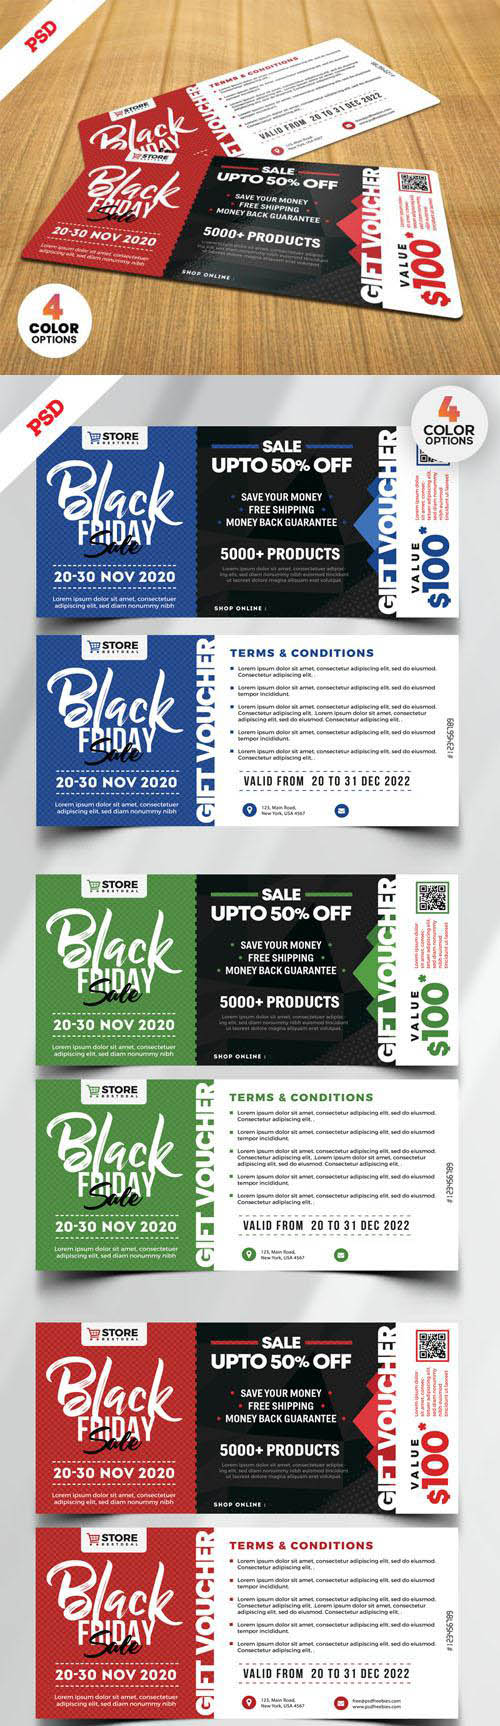 Black Friday Sale Voucher Design PSD Templates